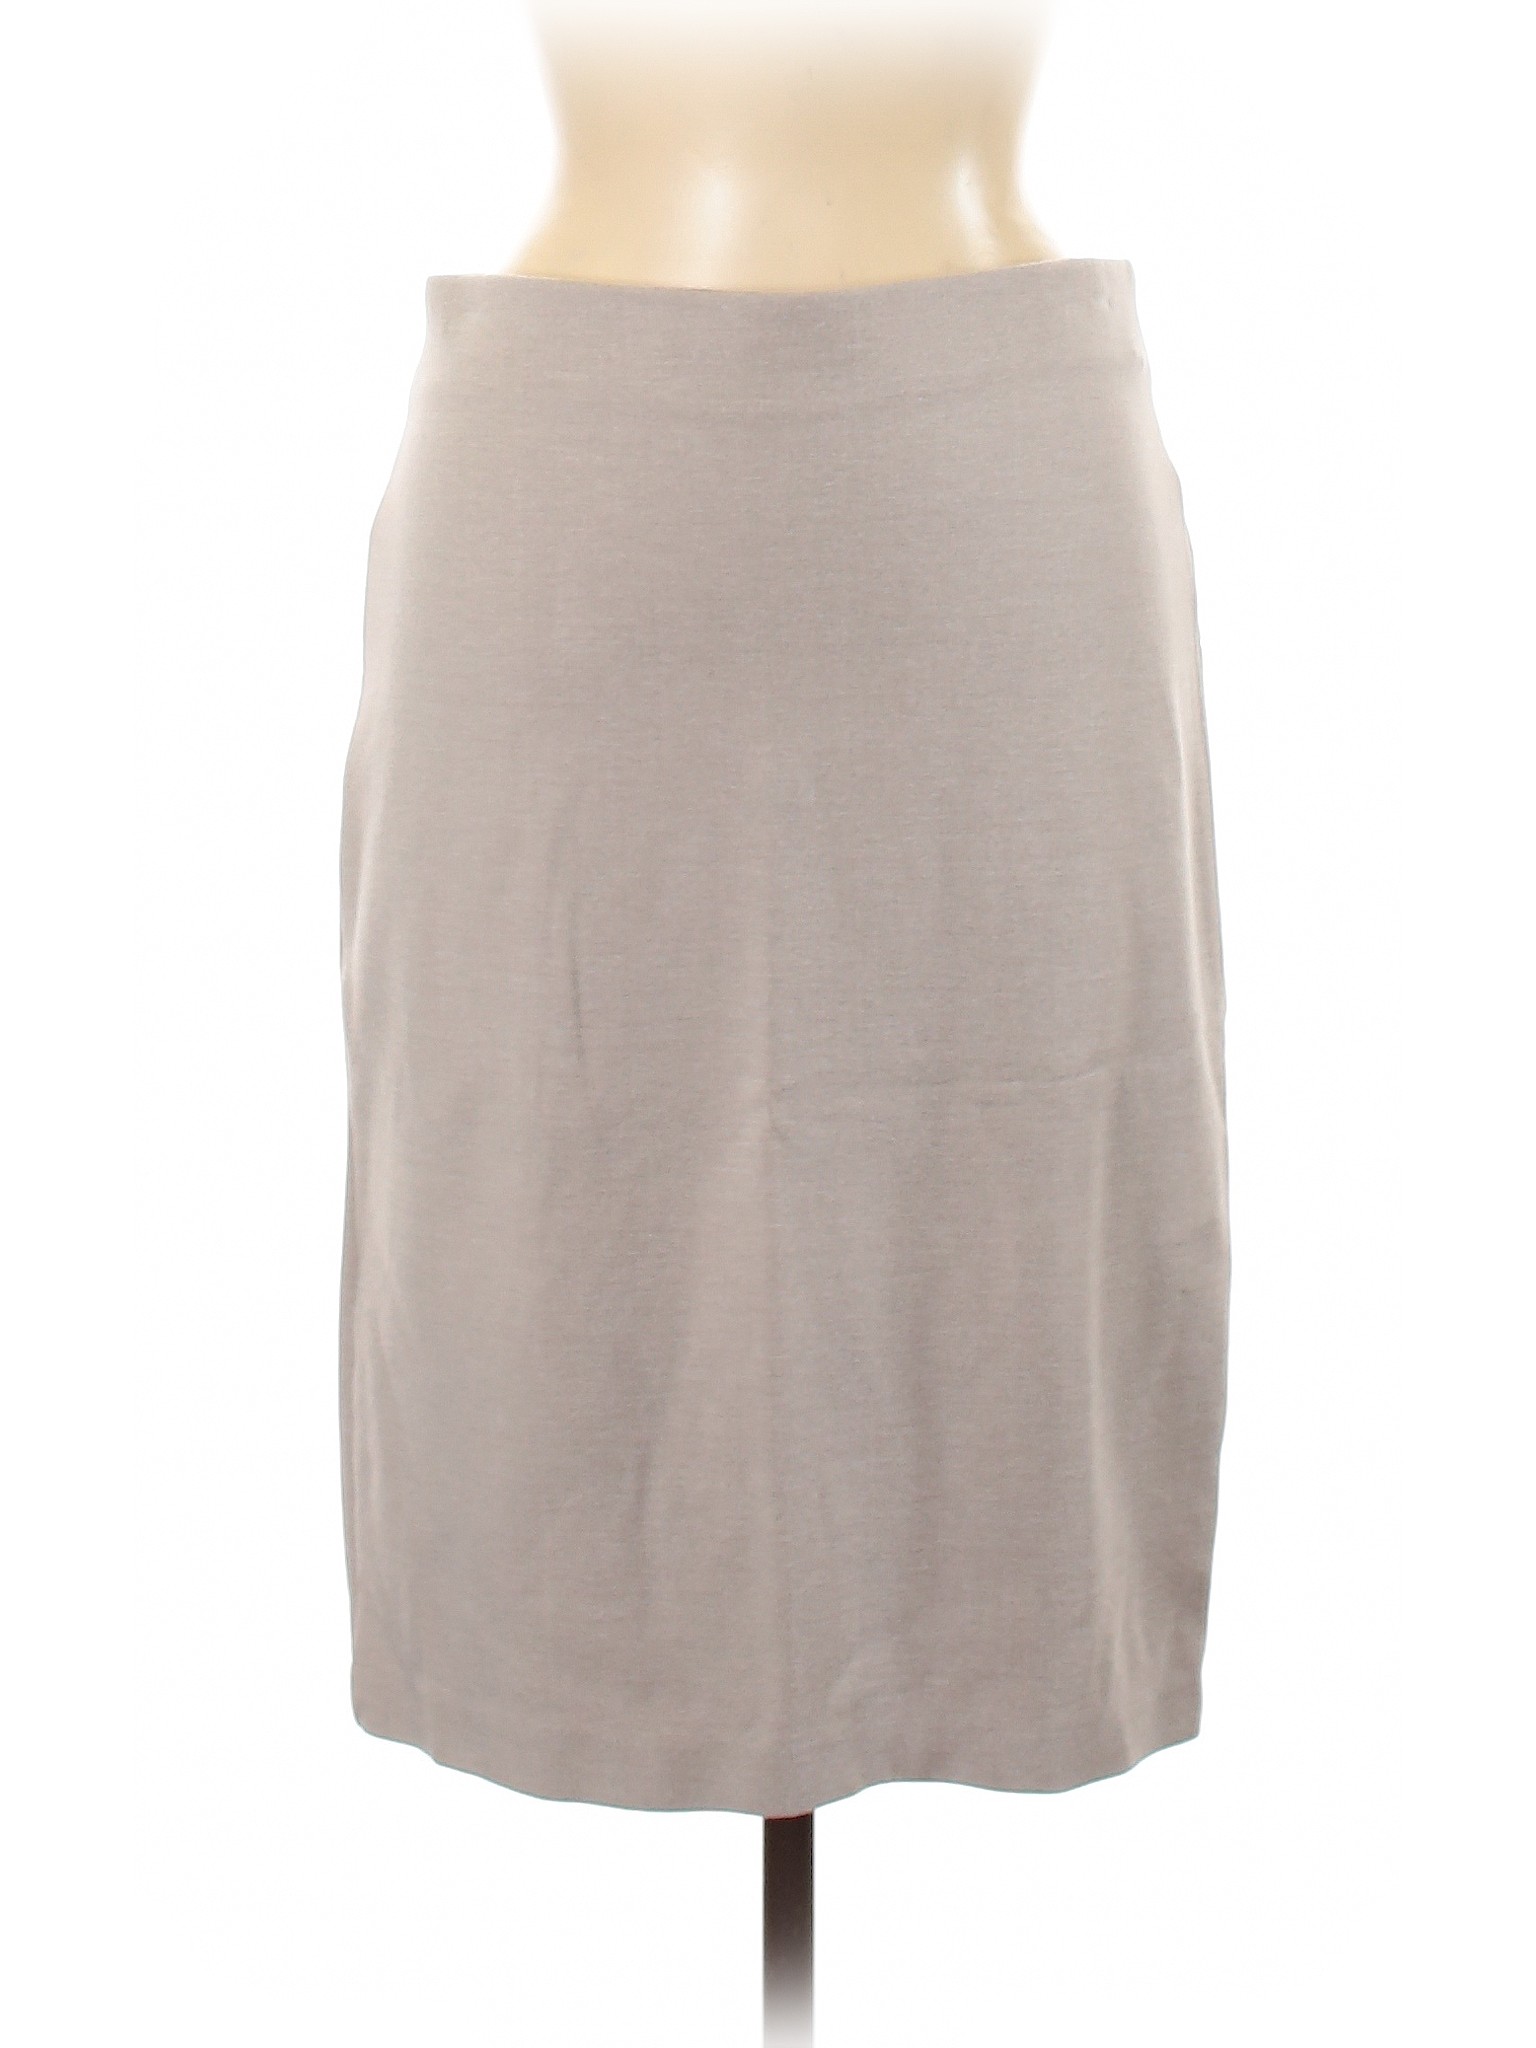 Philosophy Republic Clothing Women Brown Casual Skirt 8 | eBay